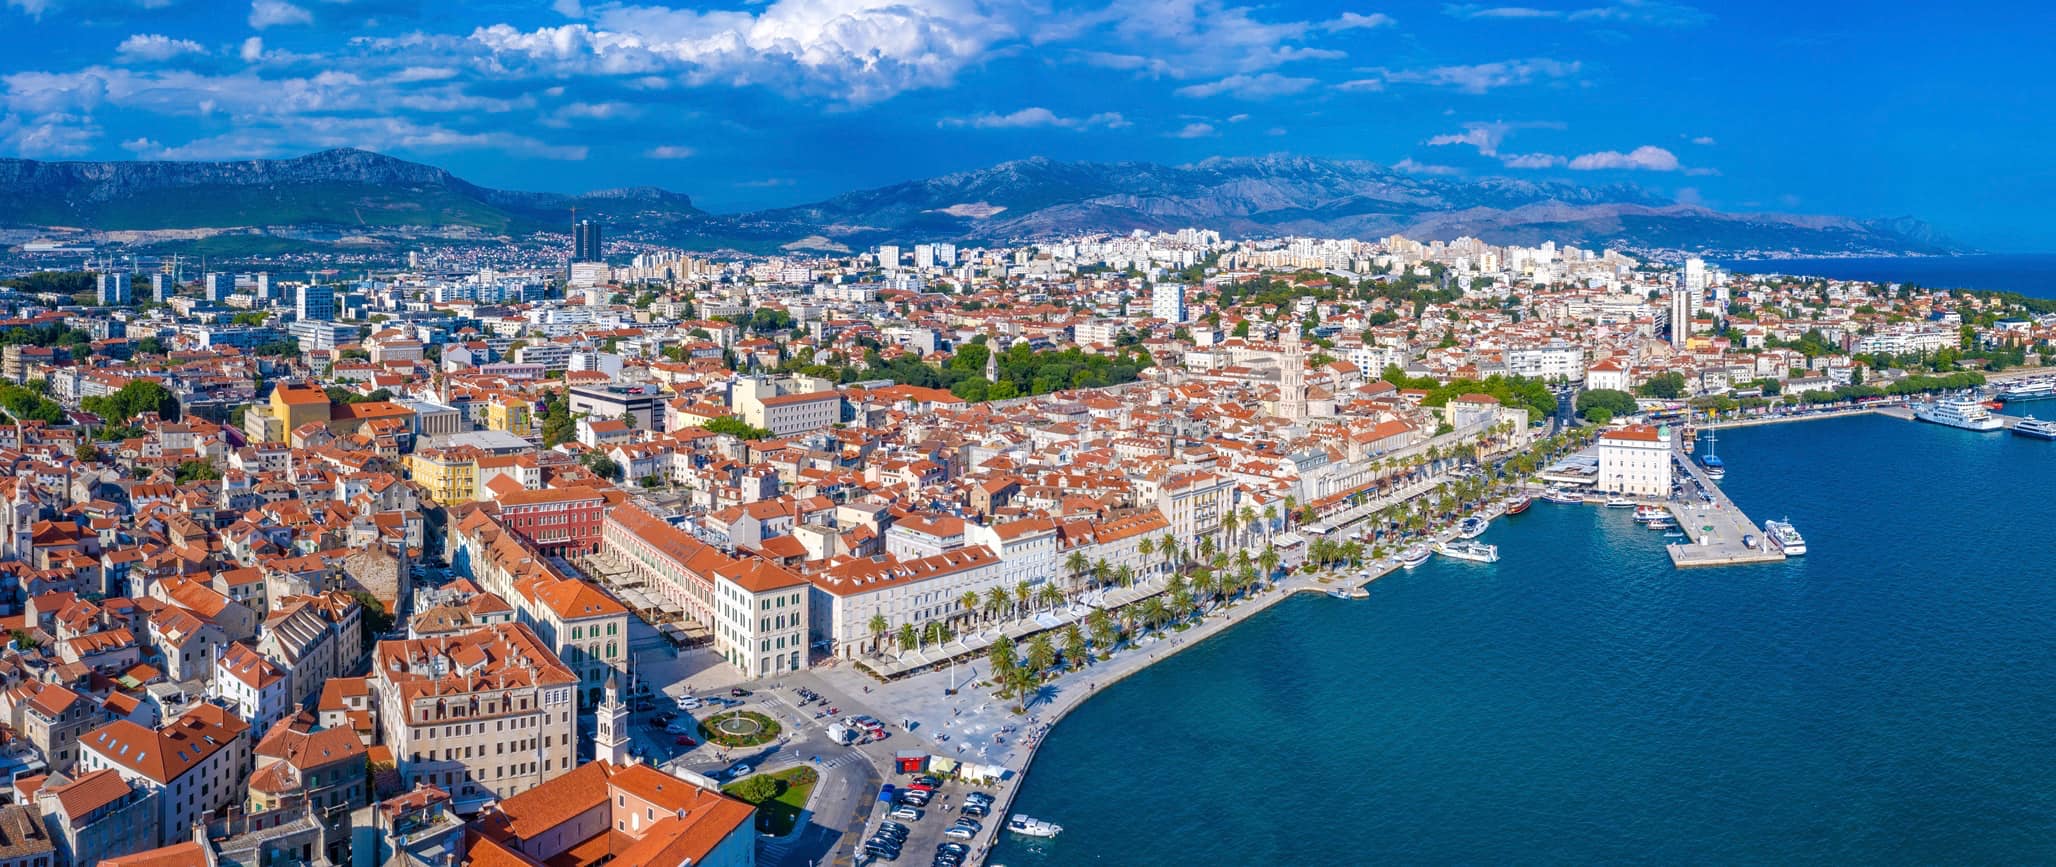 A birds-eye view of Split, Croatia on a sunny day along the Dalmatian Coast